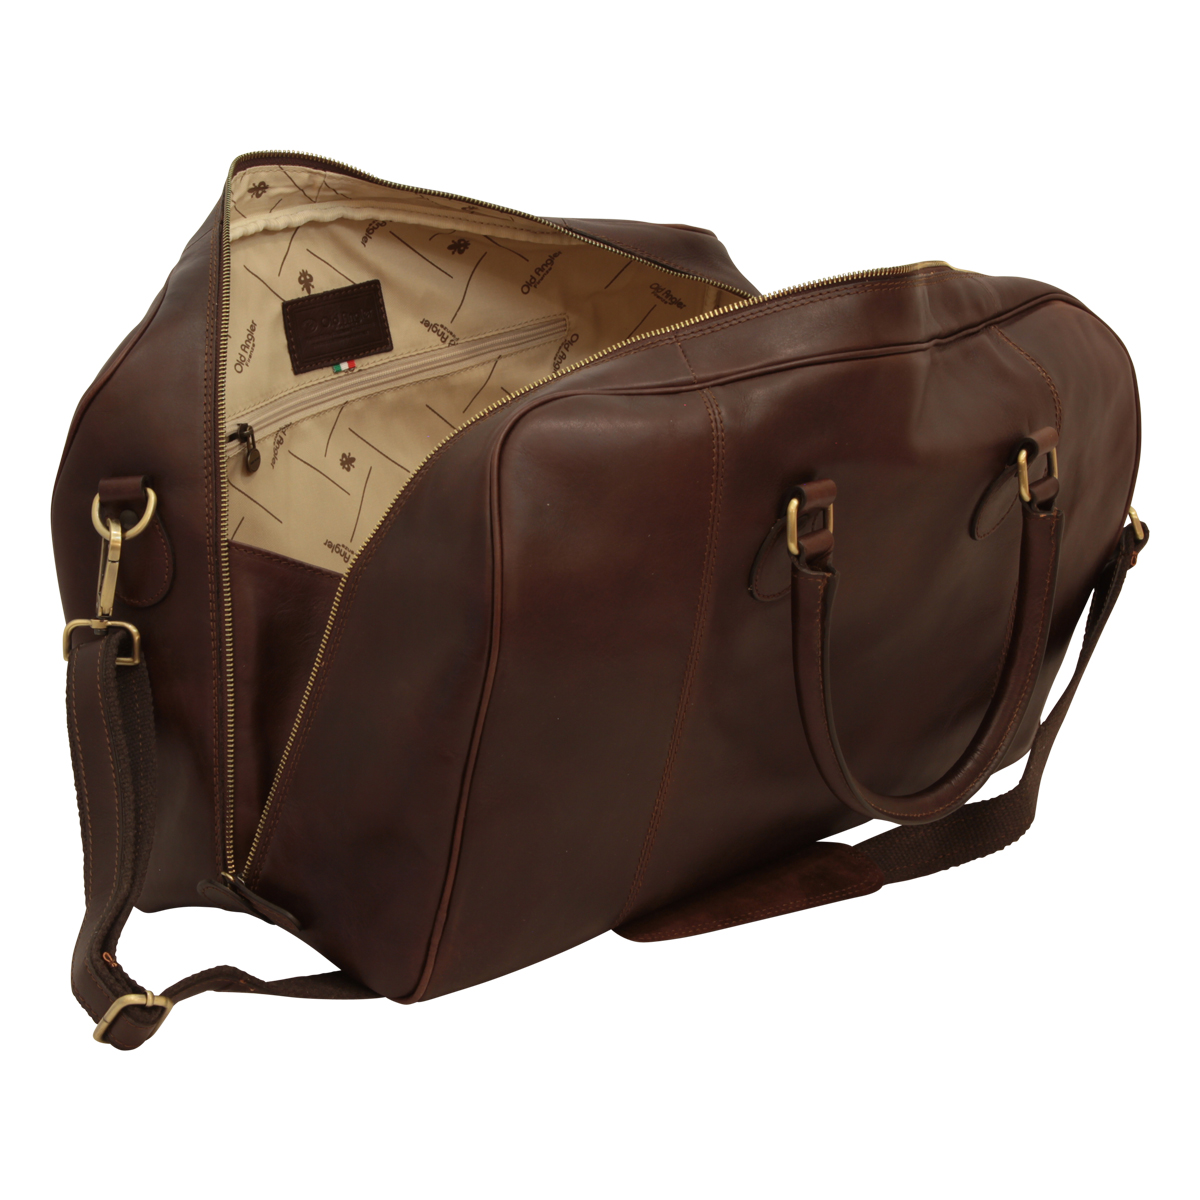 Leather Duffel Bag - Dark Brown | 404289TM | EURO | Old Angler Firenze